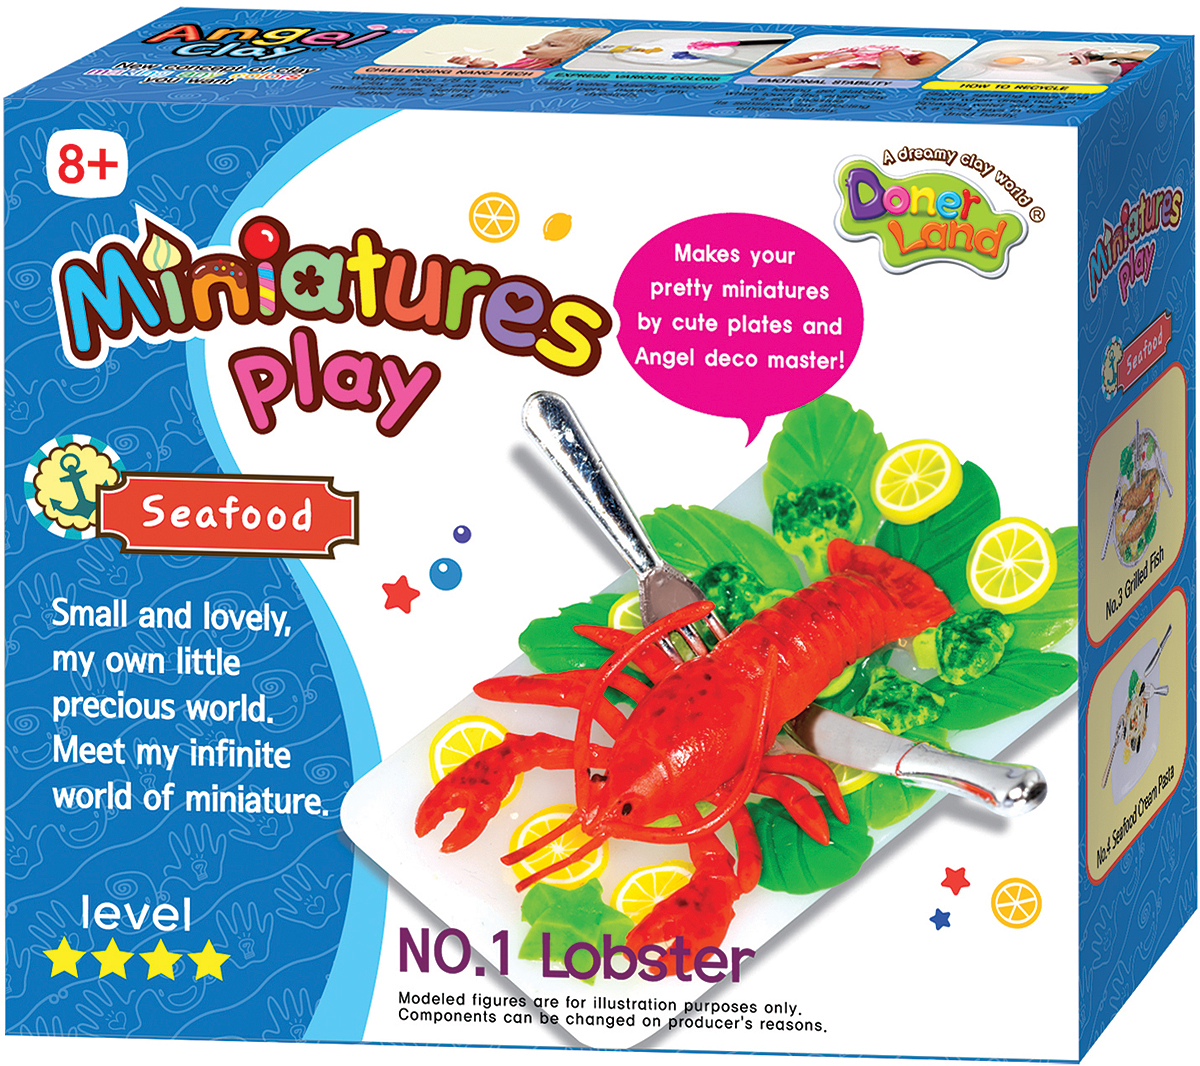 Donerland Набор для лепки Miniatures Play Lobster